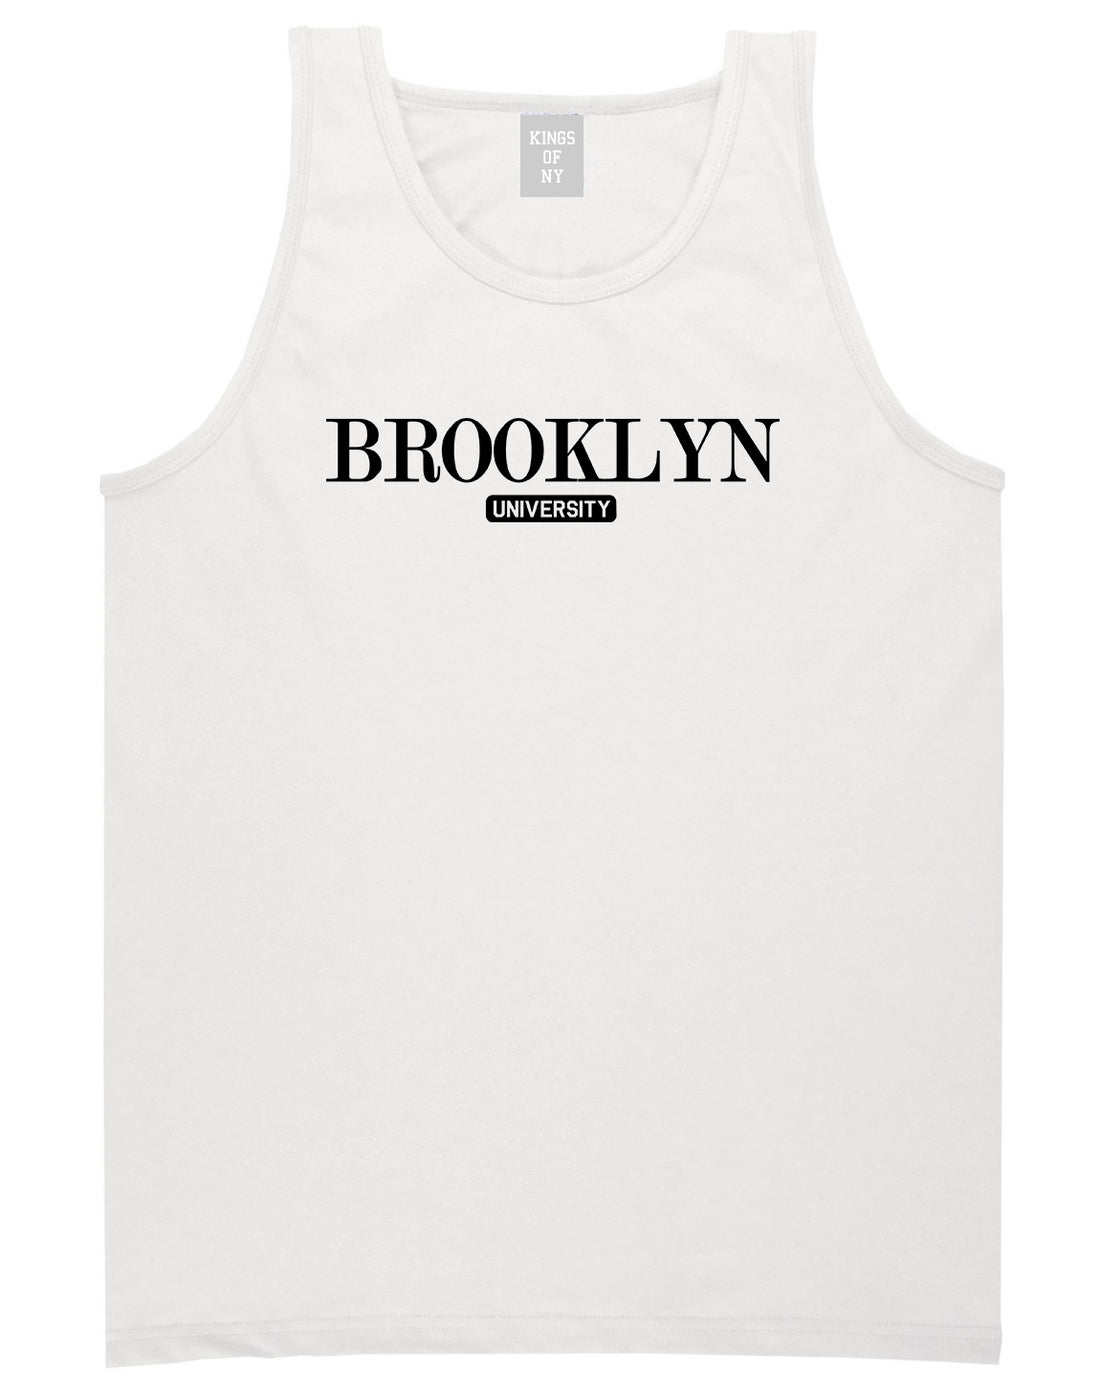 Brooklyn University New York Mens Tank Top T-Shirt White